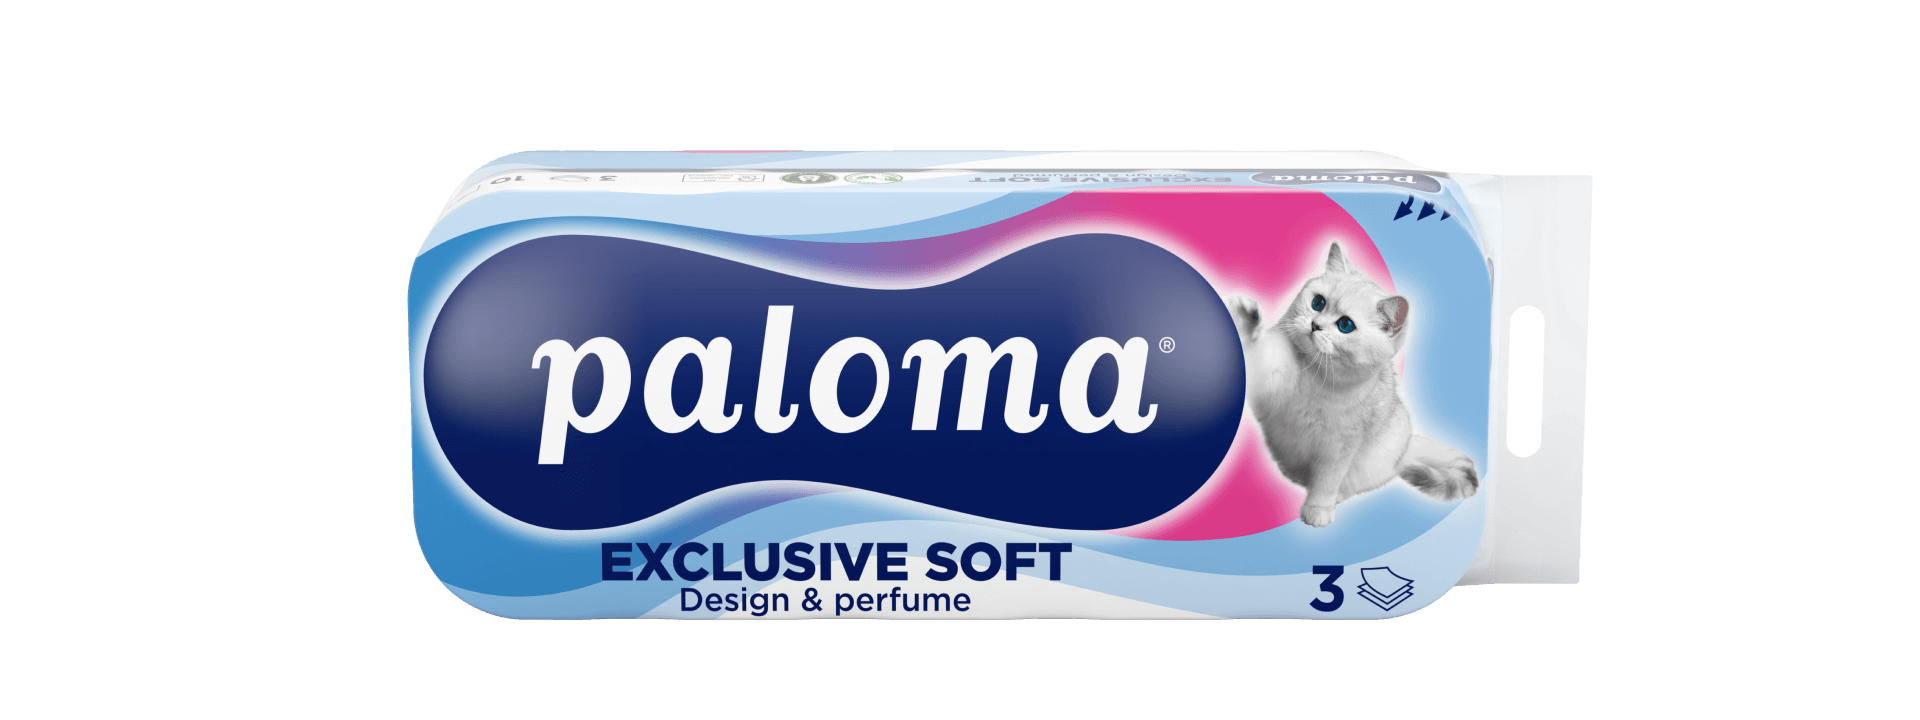 Paloma Exlusive Soft Dp Hr